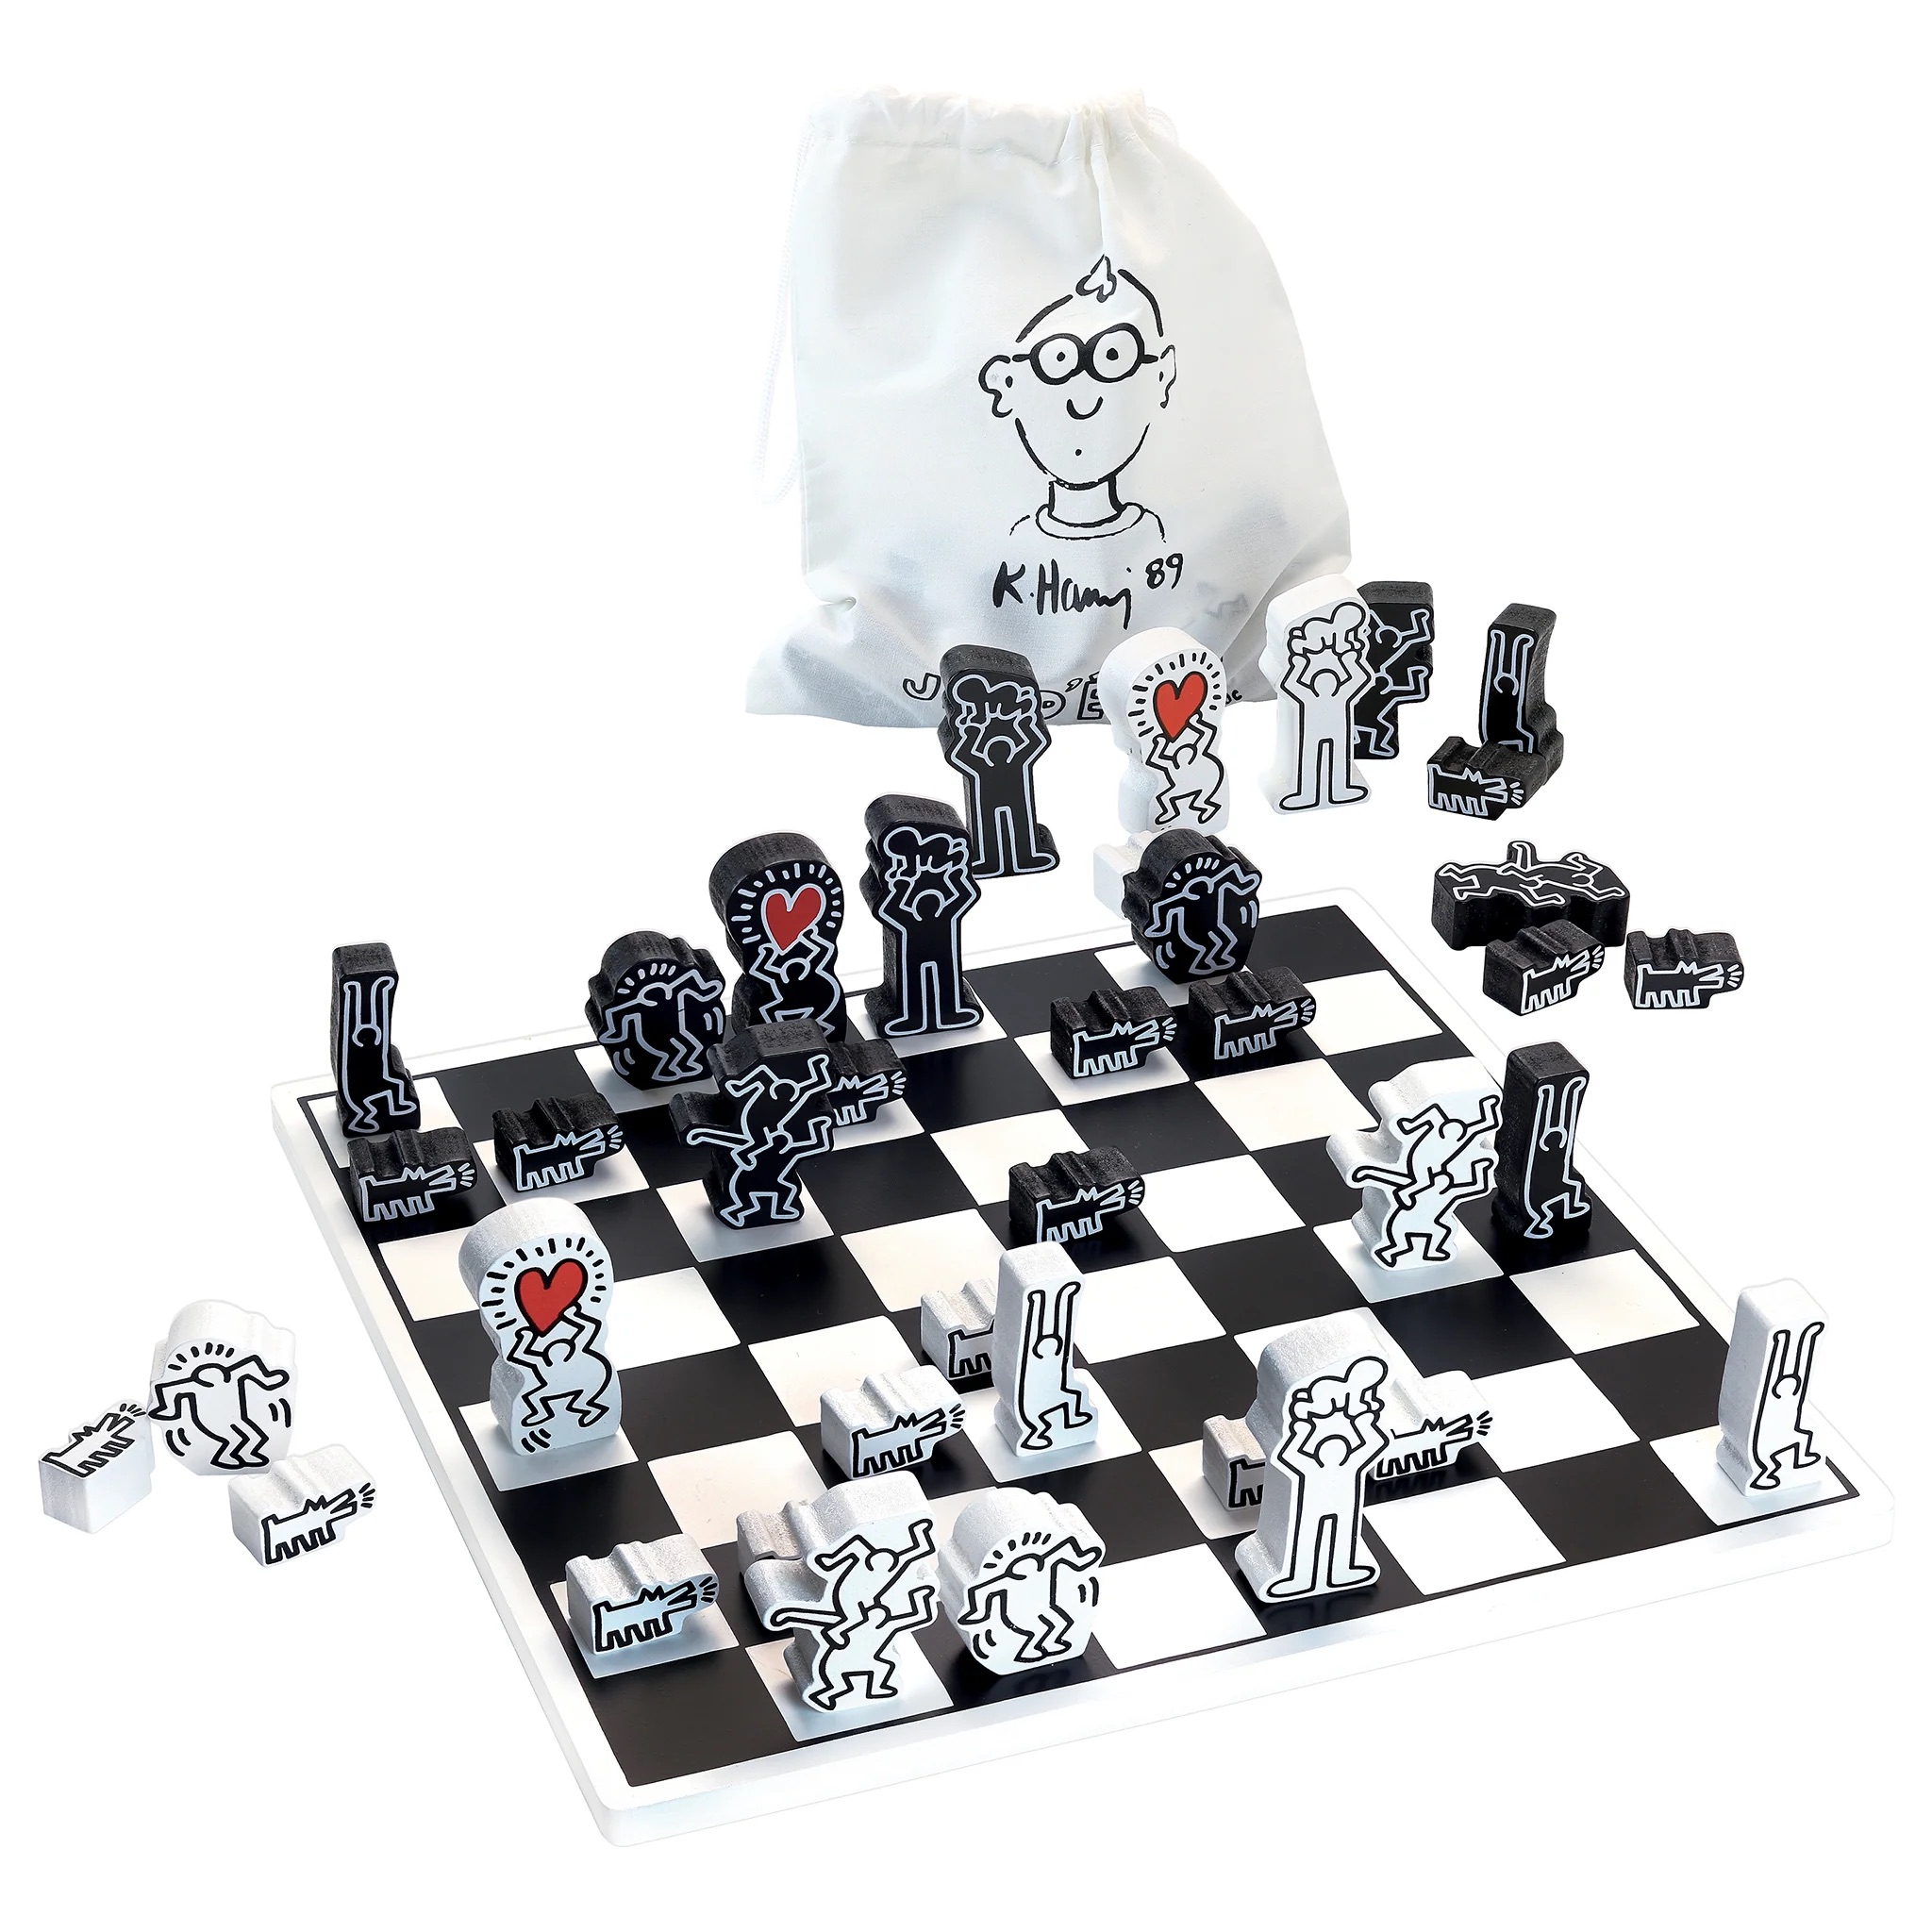 Keith Haring Chess Set - Image 2 of 2